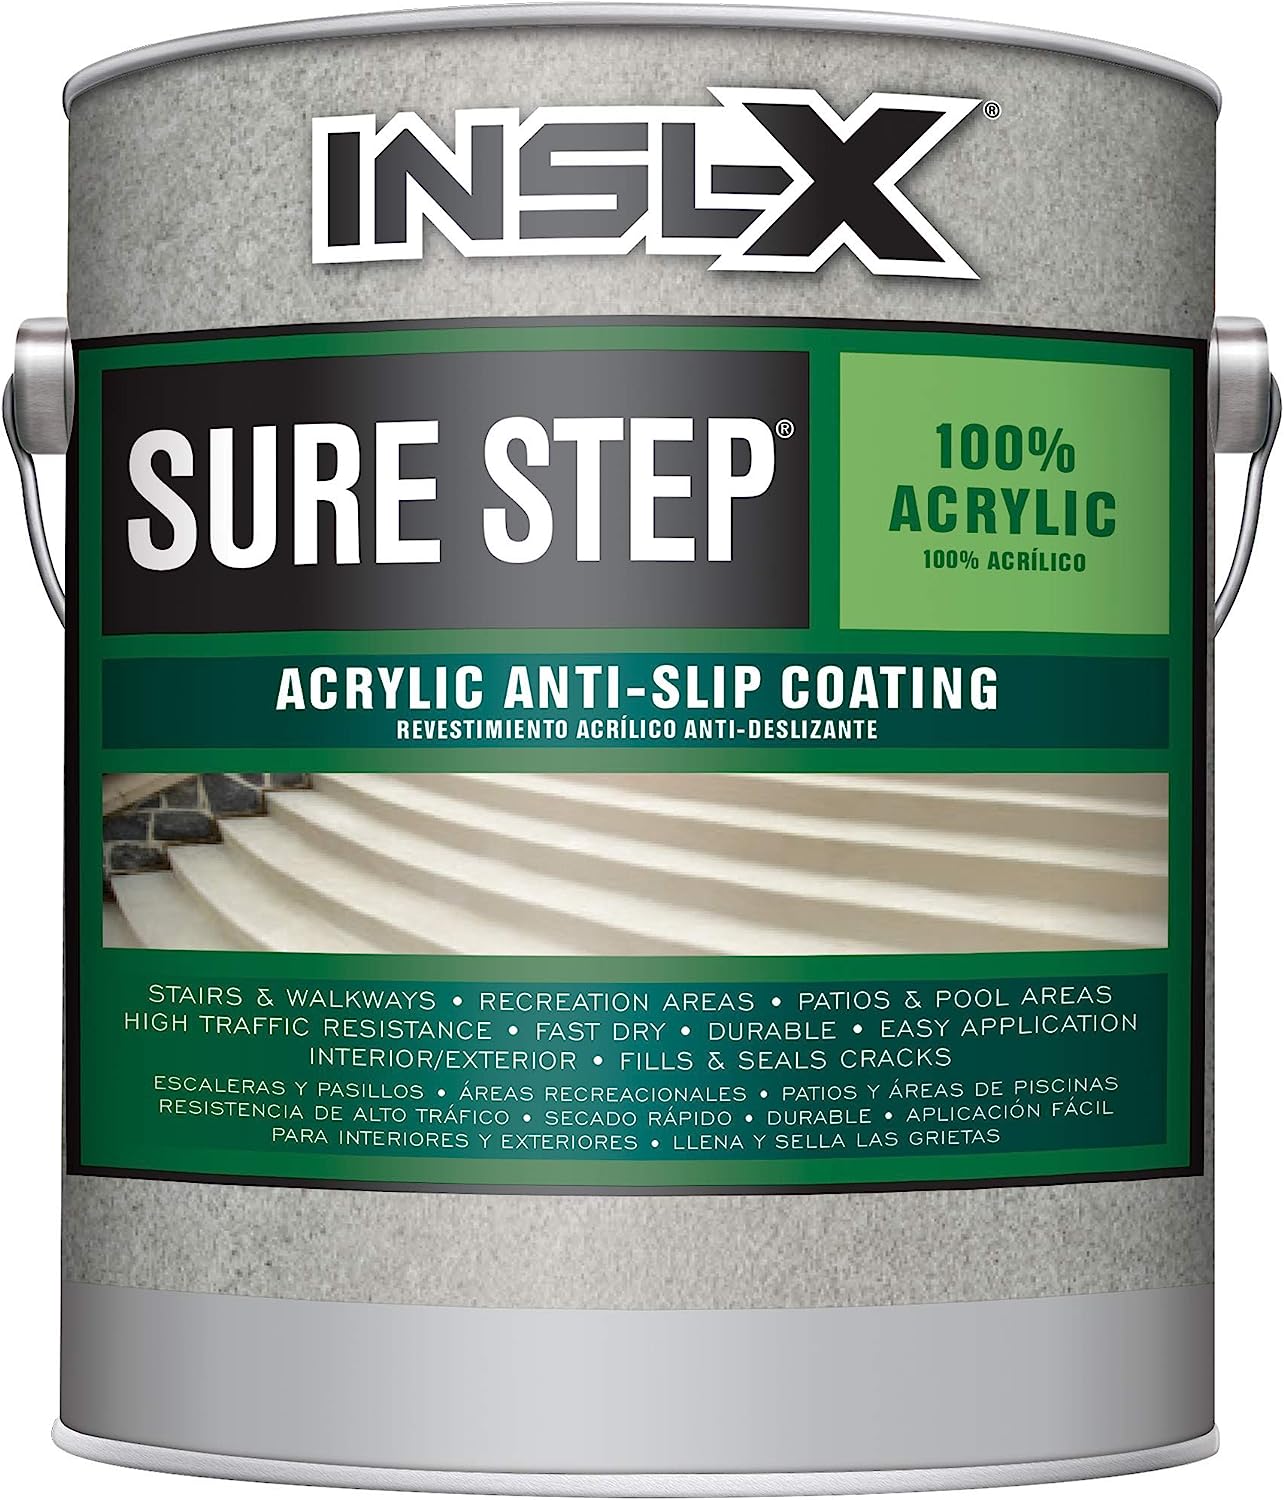 INSL-X SU099809A-01 Sure Step Acrylic Anti-Slip [...]